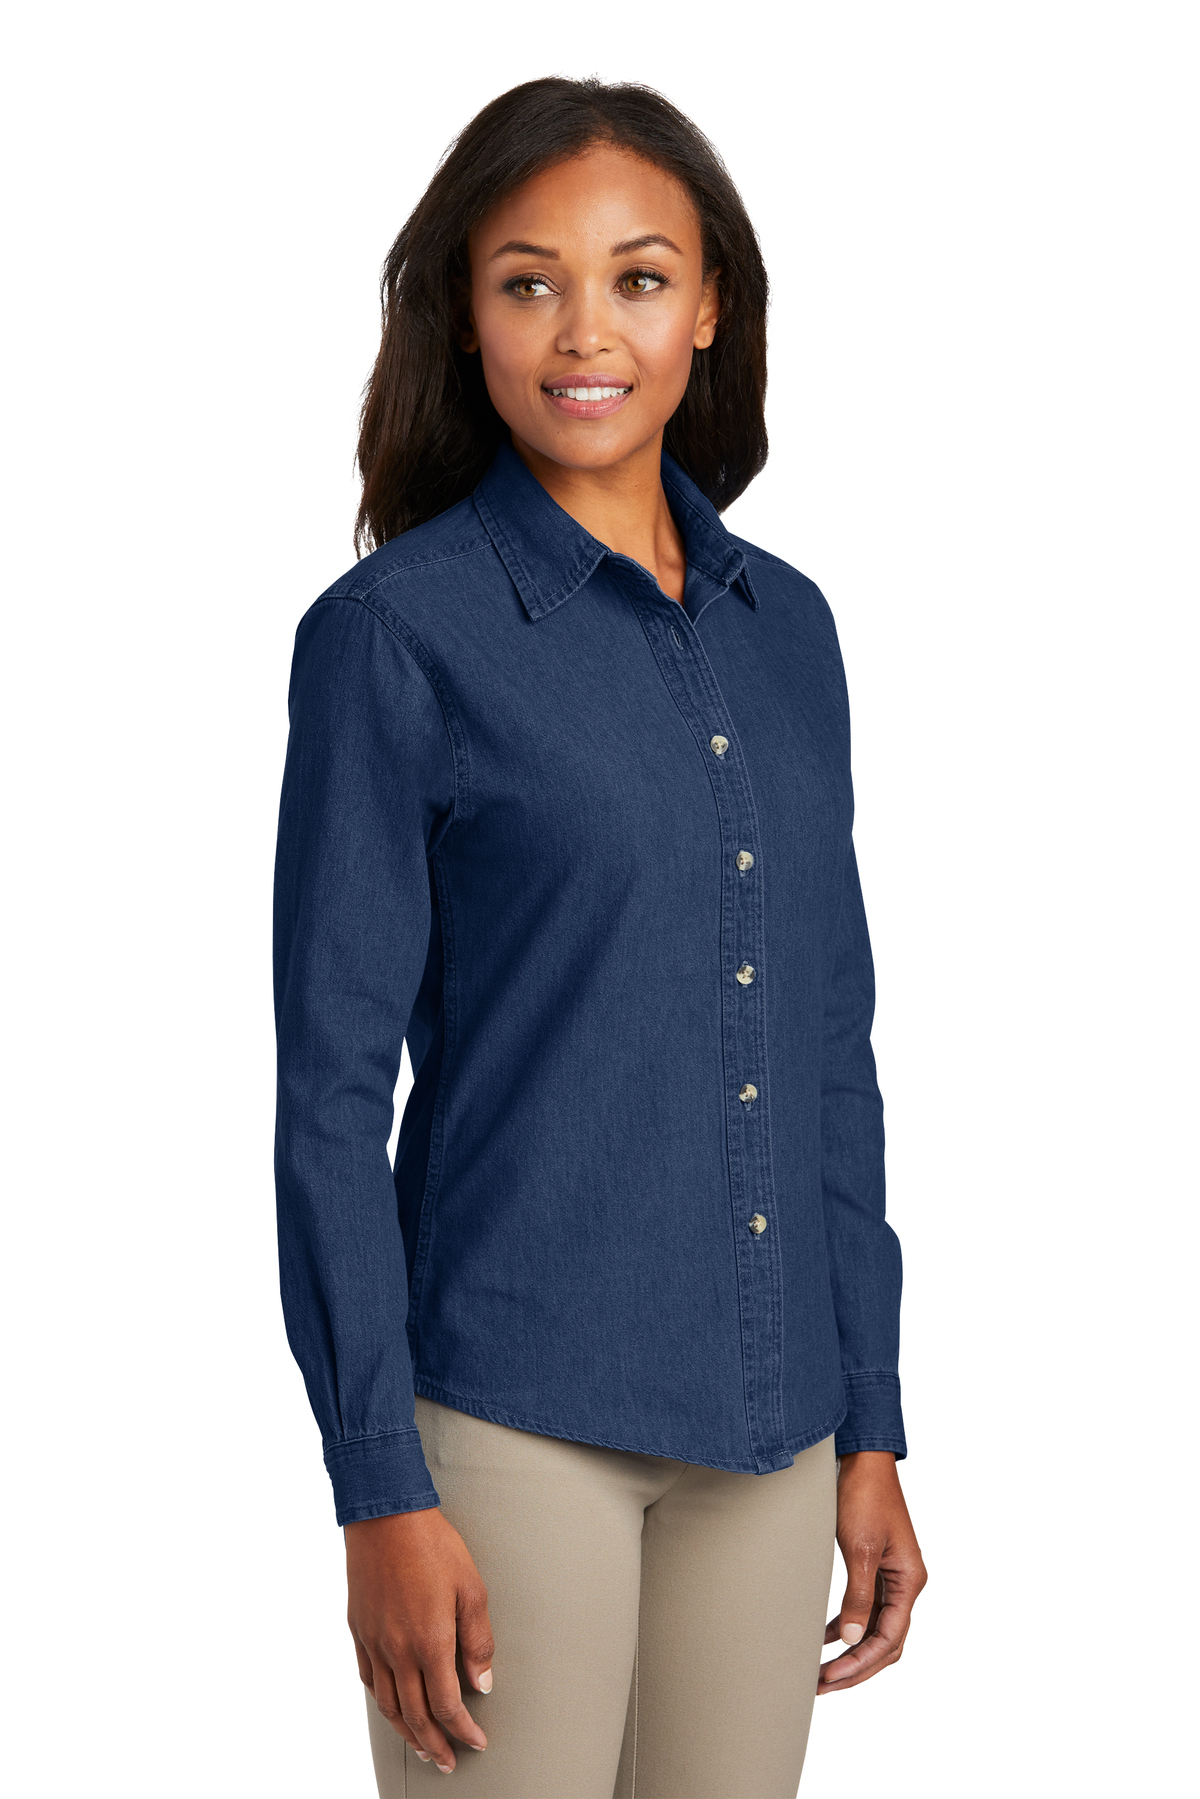 Port & Company - Long Sleeve Value Denim Shirt | | Port & Company